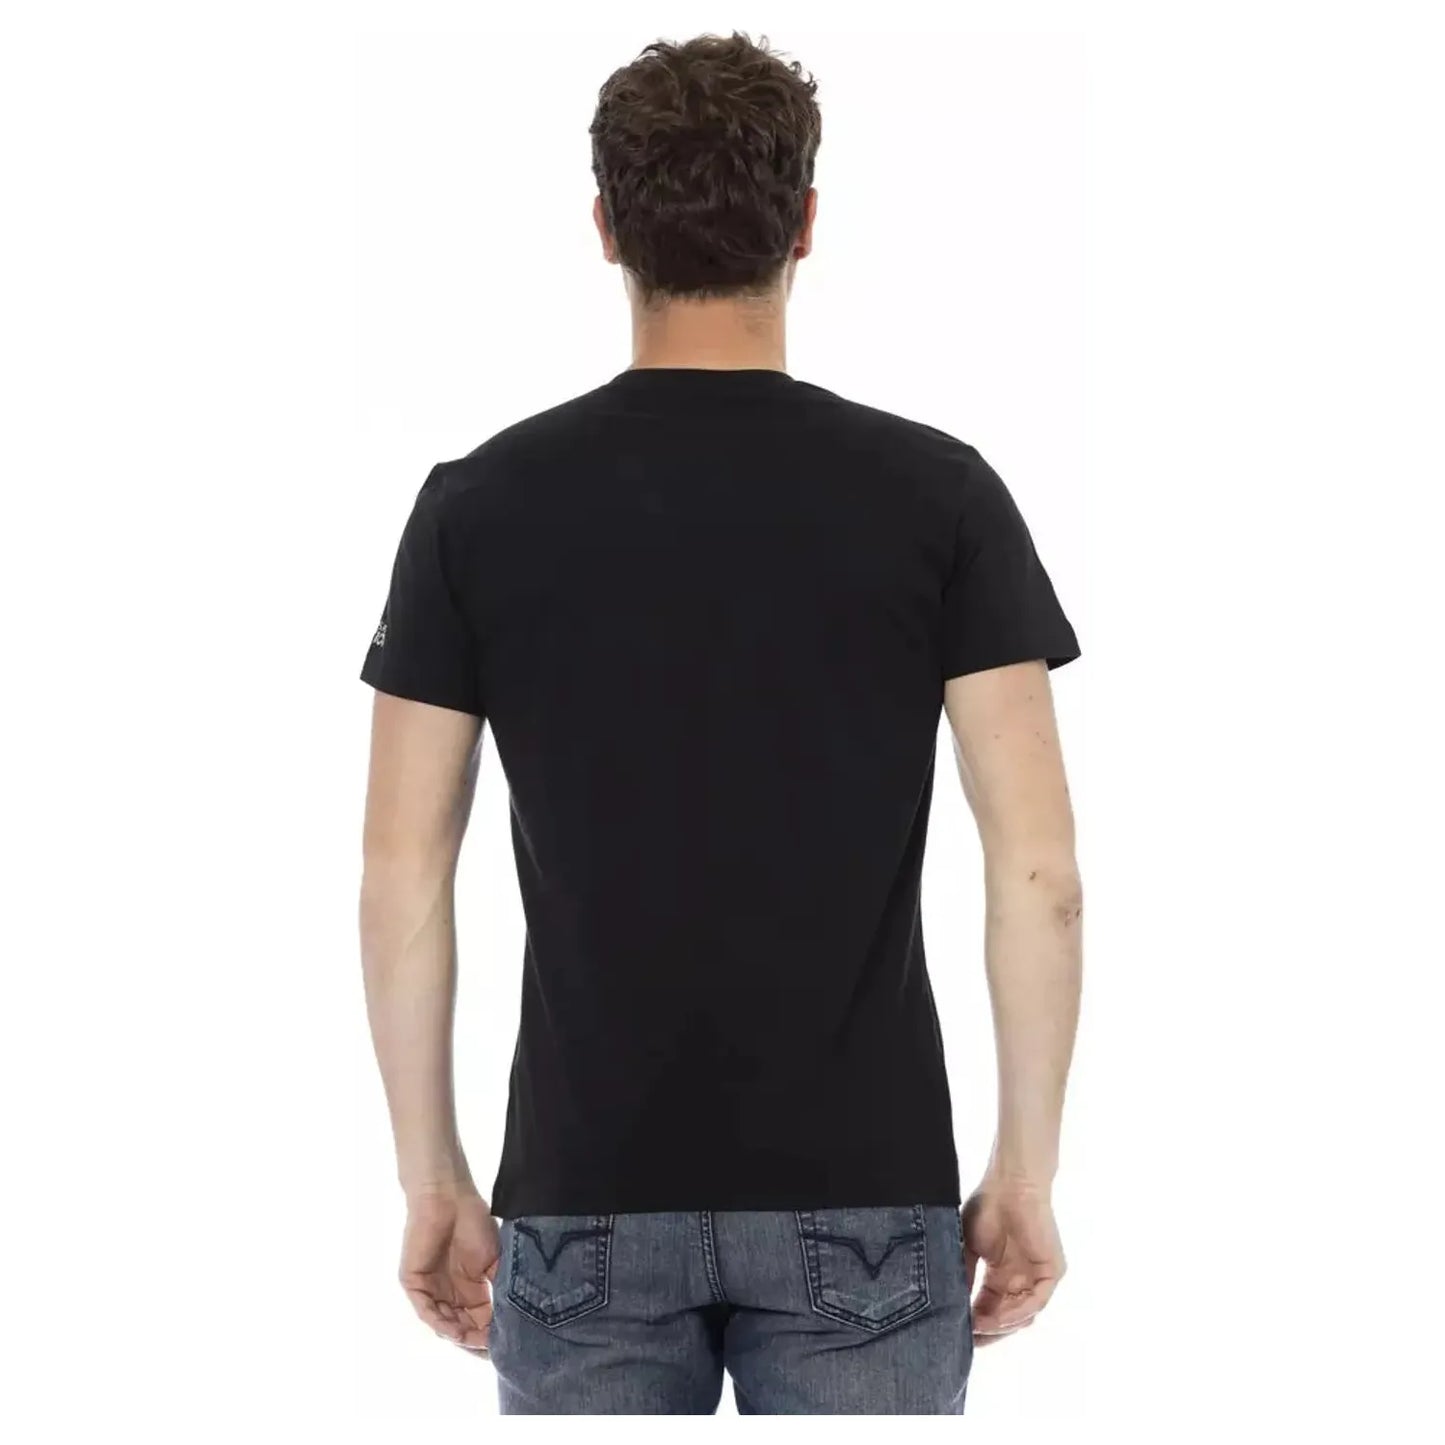 Trussardi Action Elegant Short Sleeve V-Neck Tee black-cotton-t-shirt-66